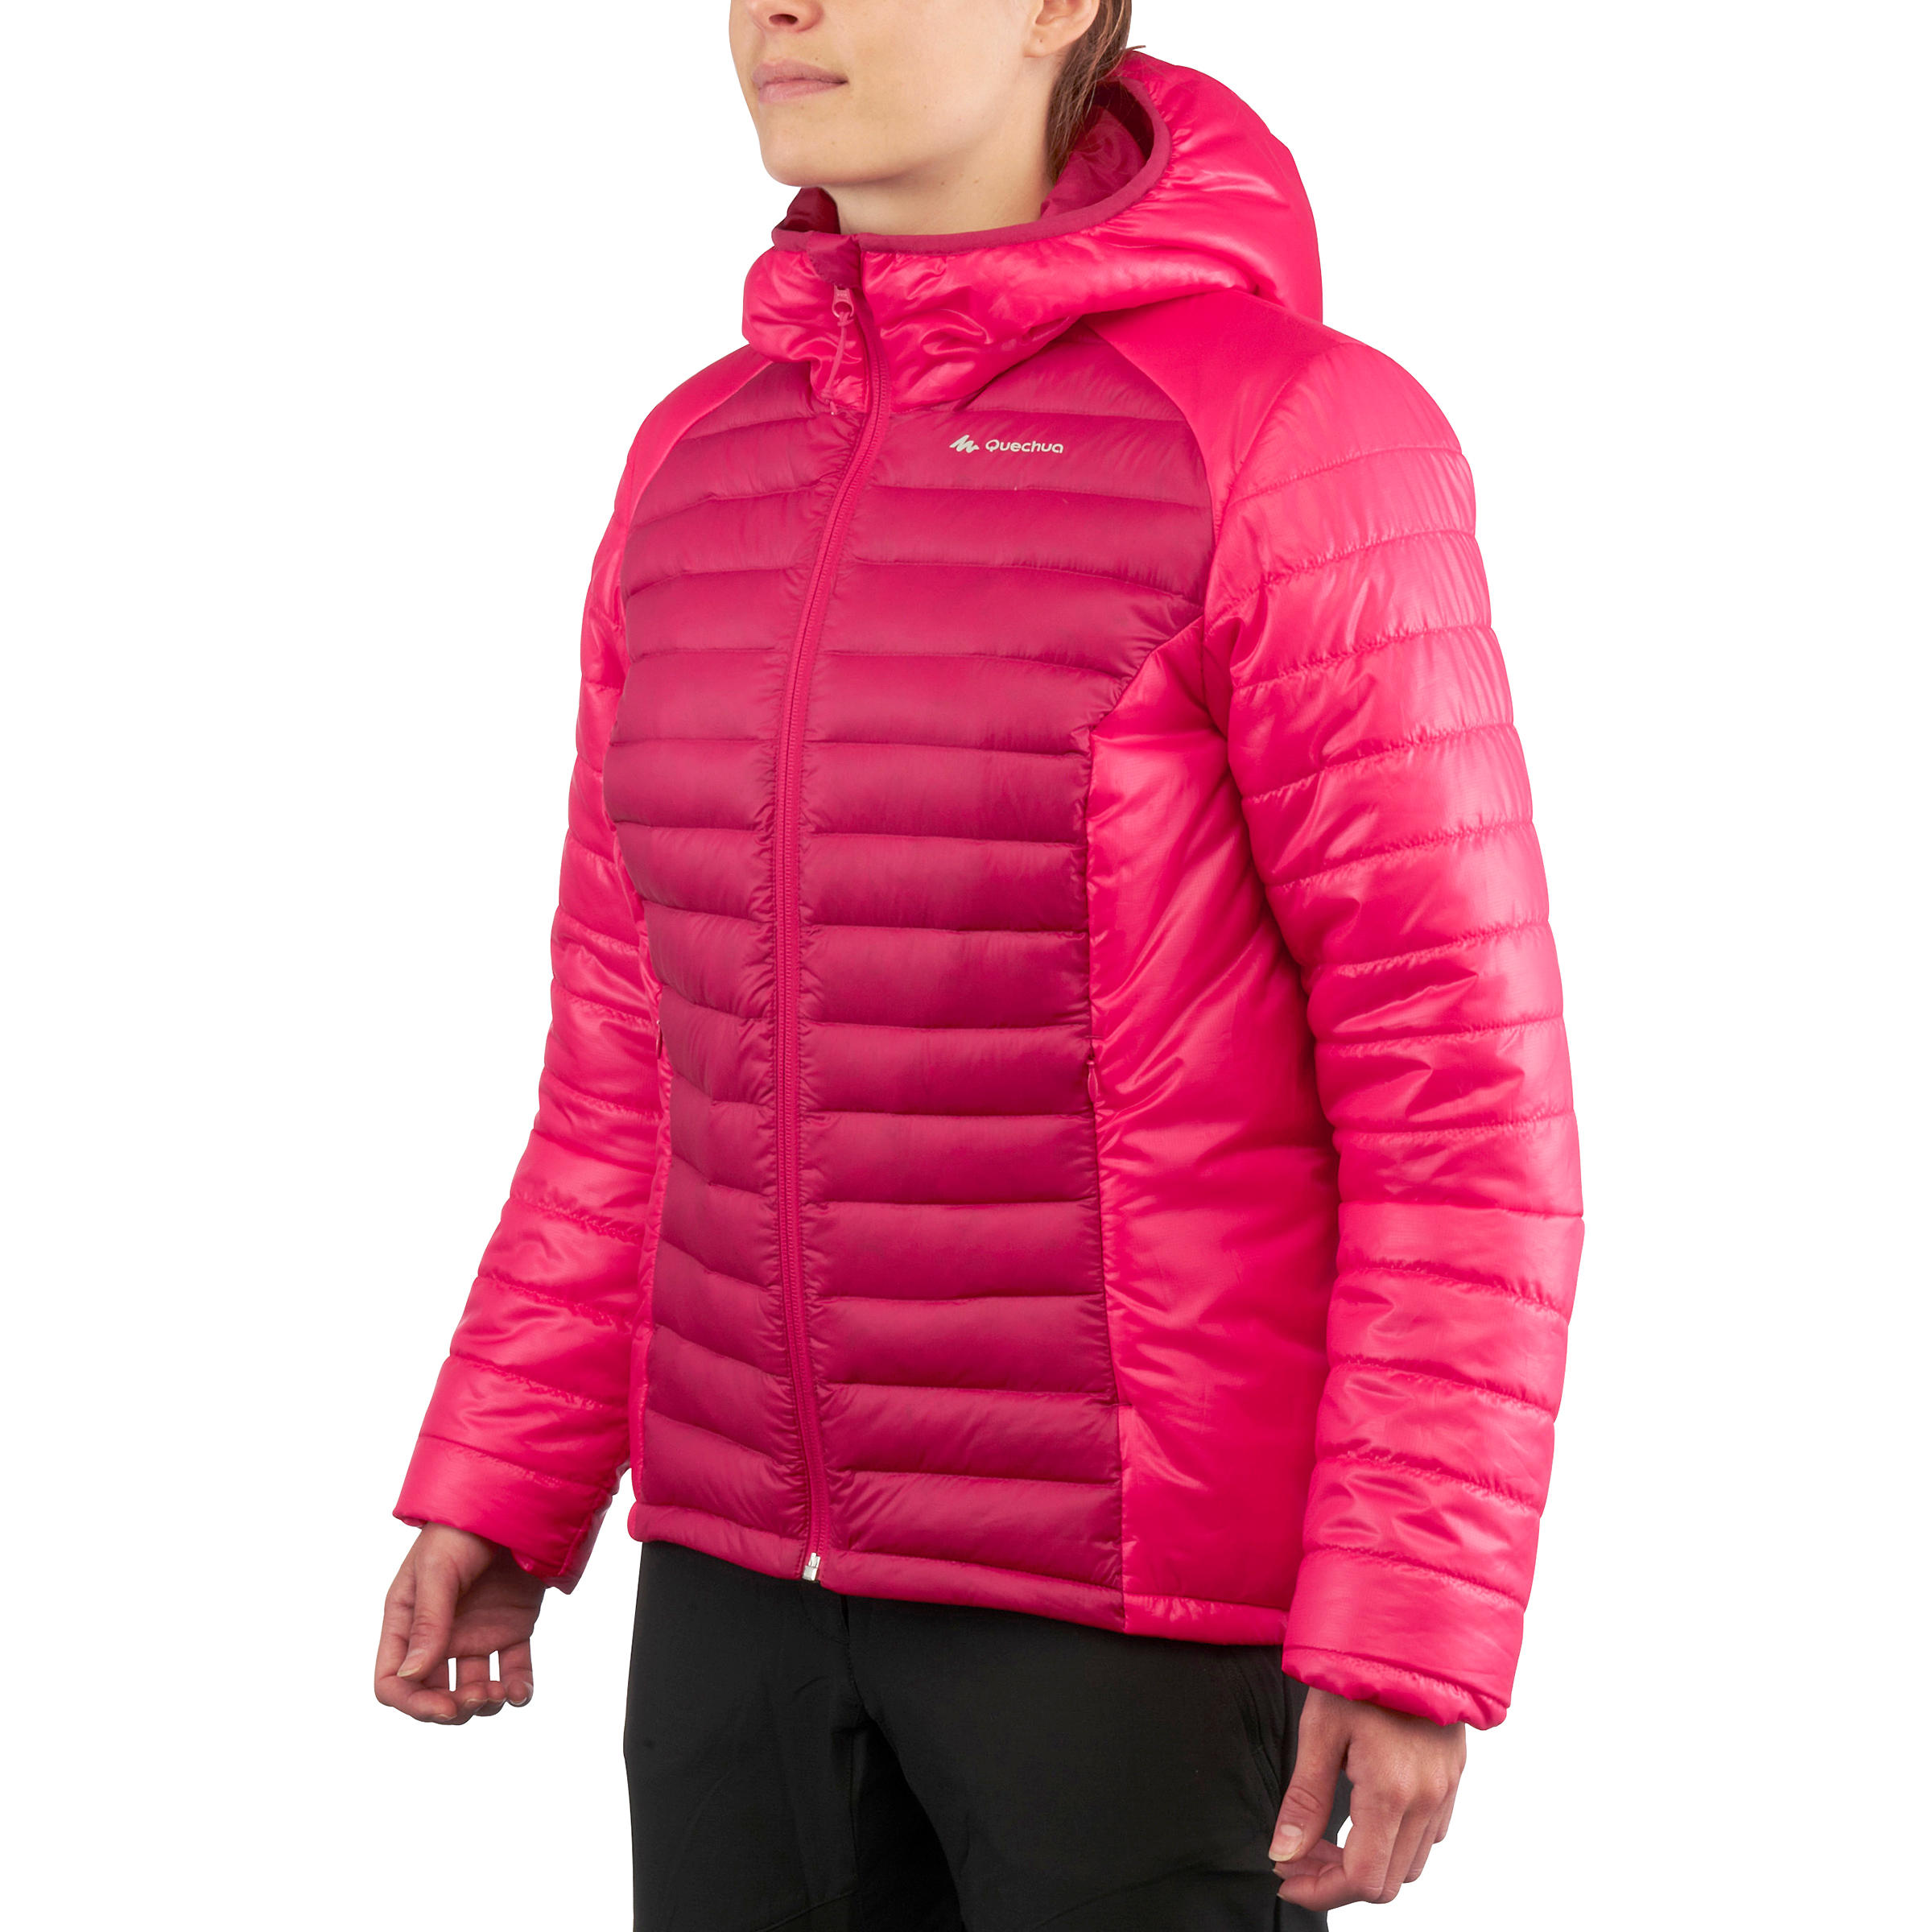 X-Light 1 Woman's Padded Hiking Jacket - Pink 13/17